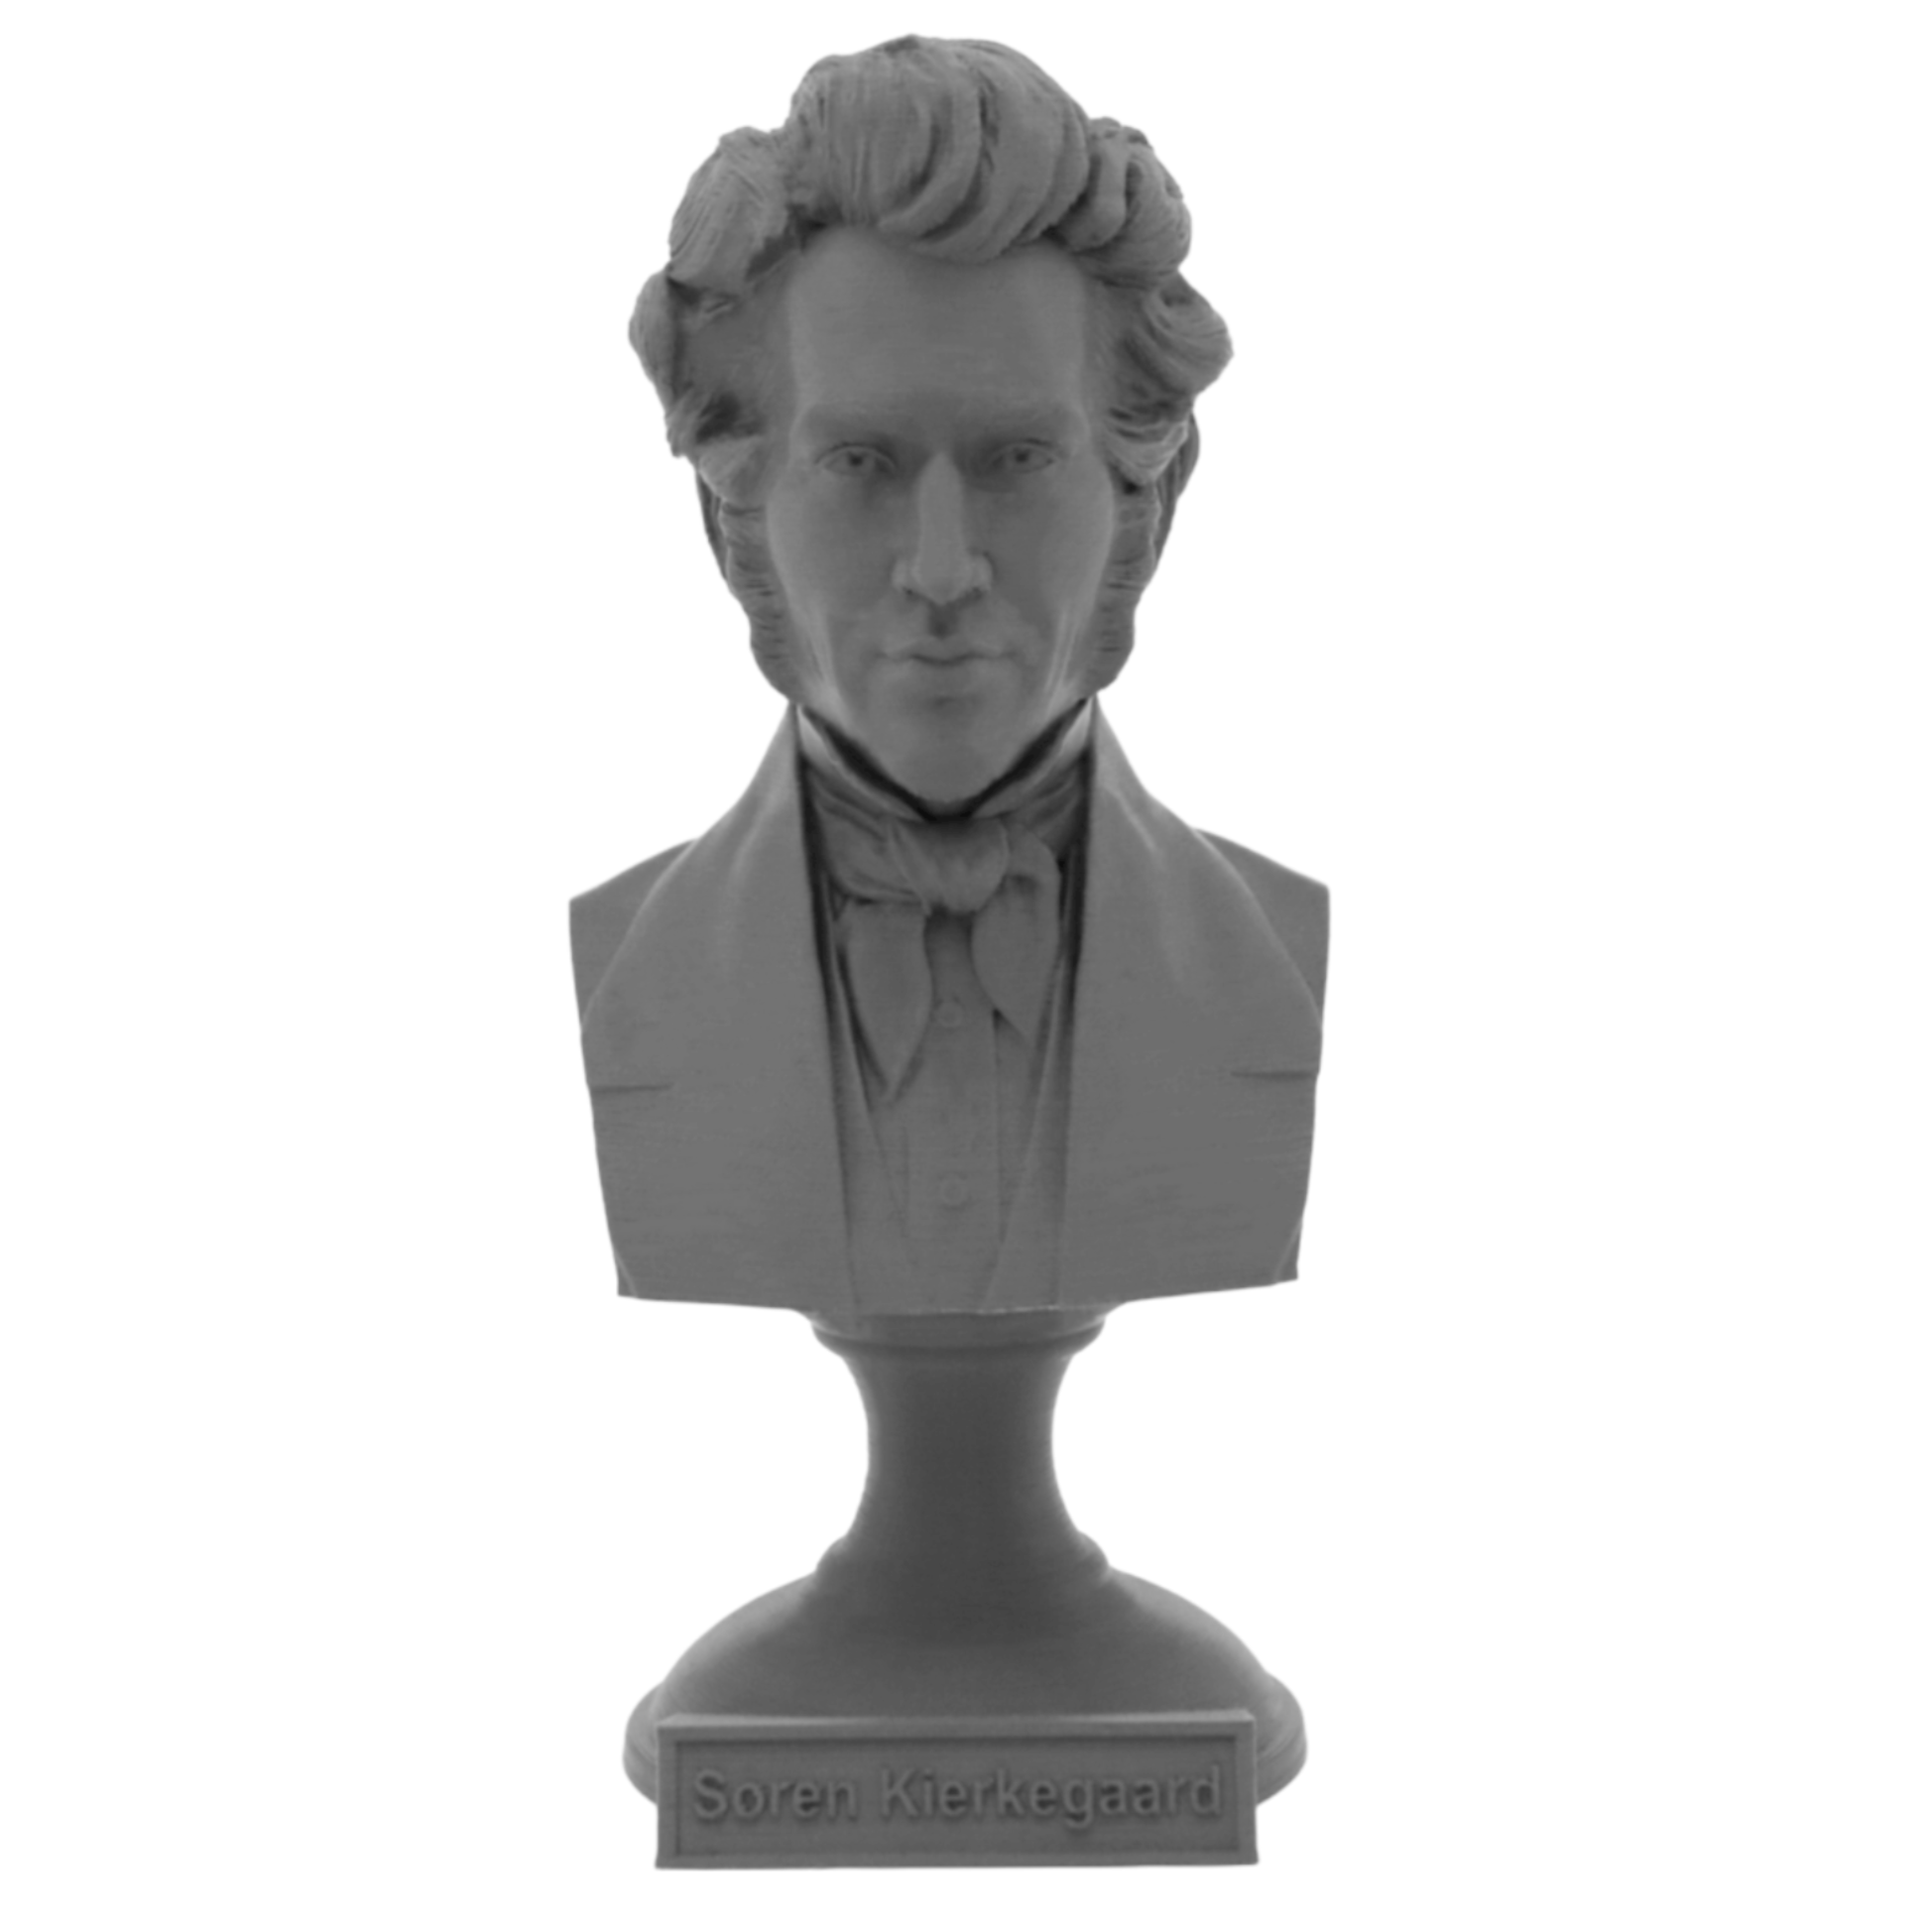 Søren Kierkegaard Danish Existentialist Philosopher Sculpture Bust on Pedestal